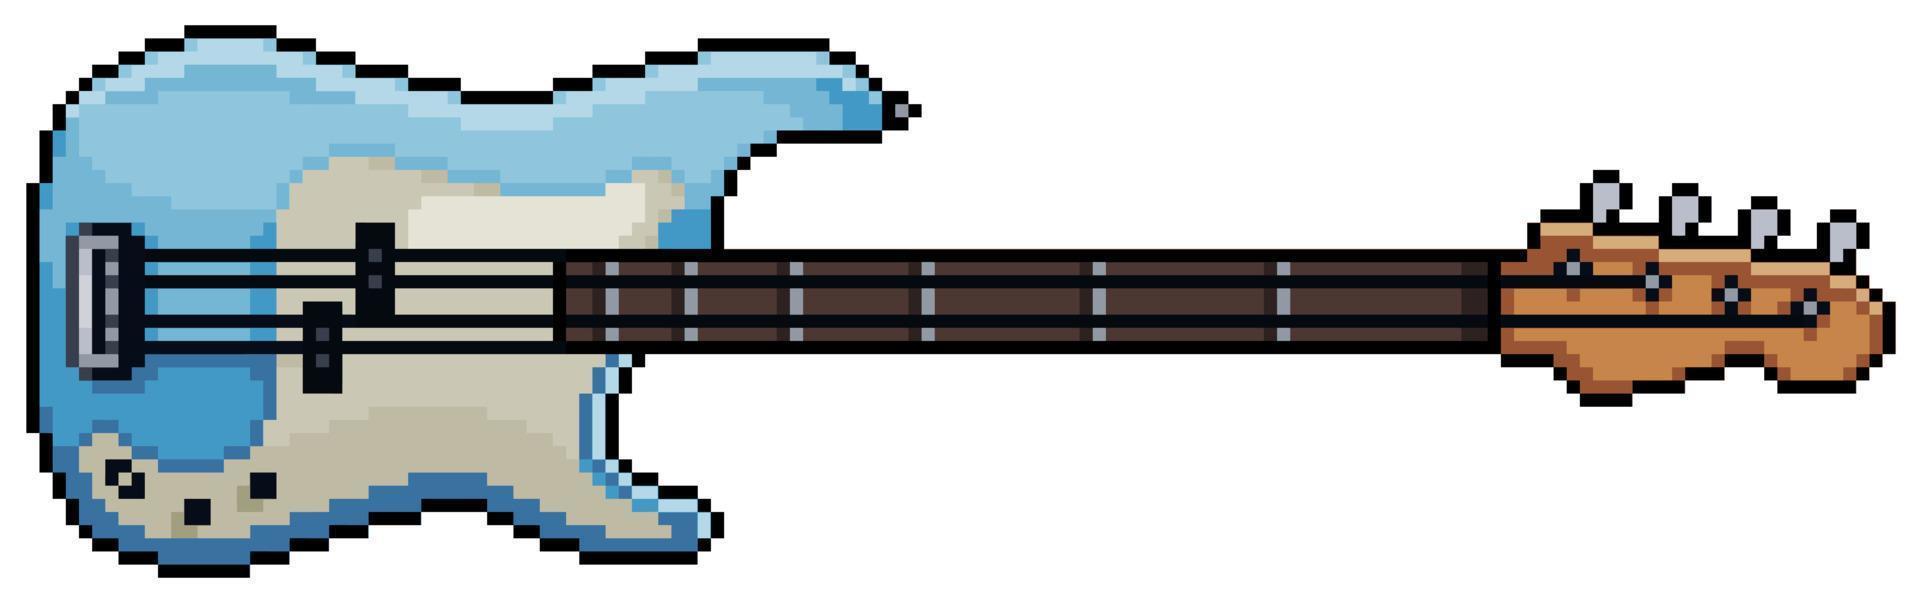 Pixel Art Guitar musical instrument. 8bit game item on white background vector